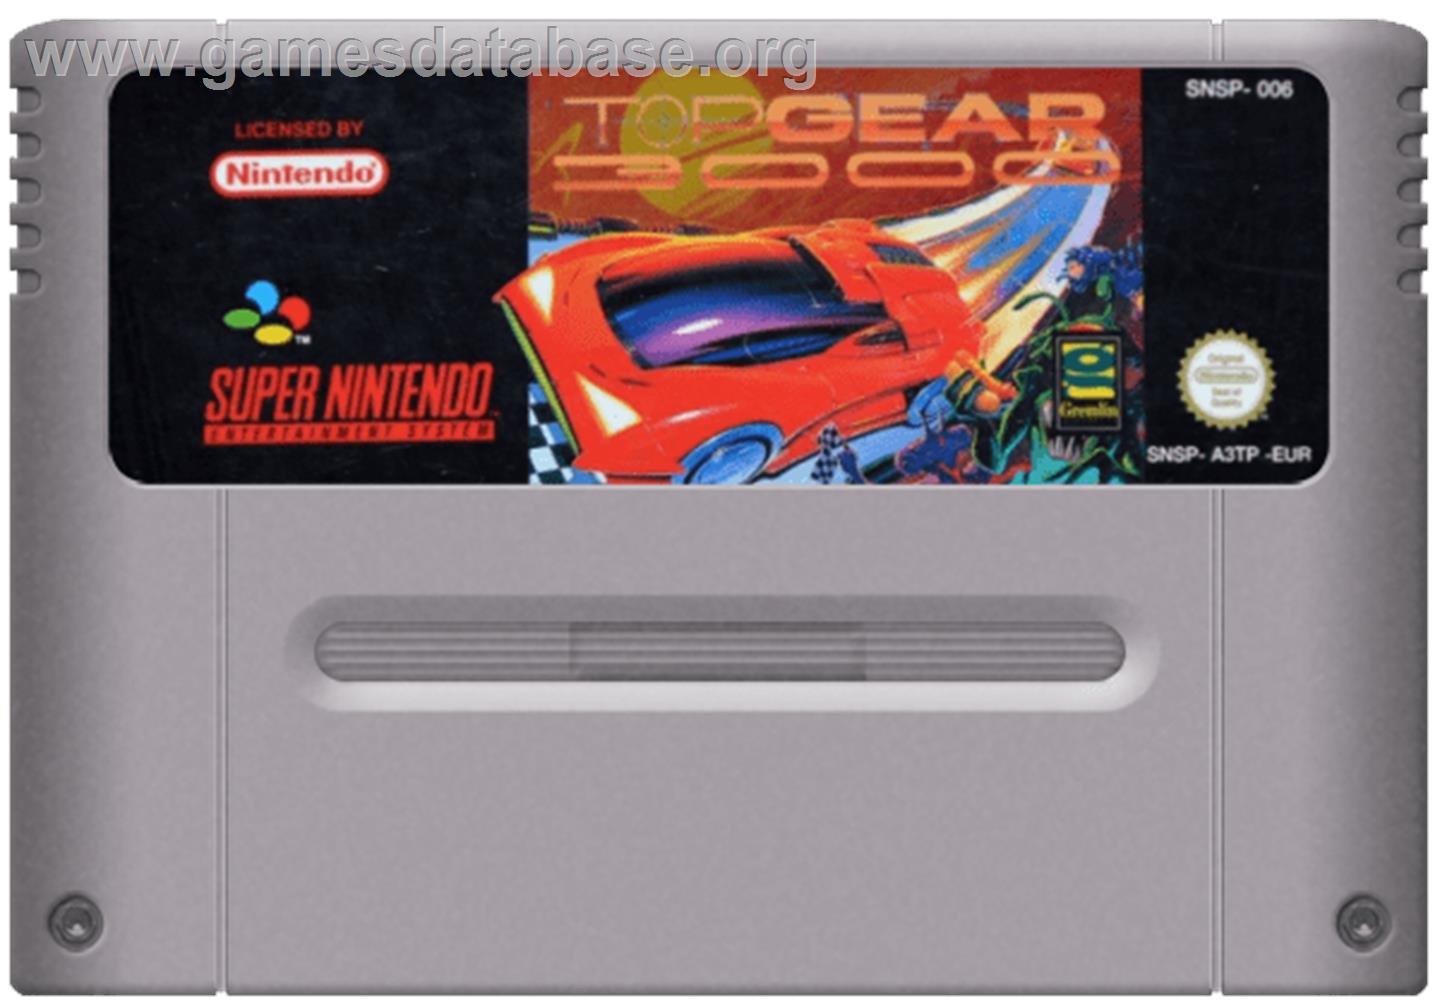 Top Gear 3000 - Nintendo SNES - Artwork - Cartridge